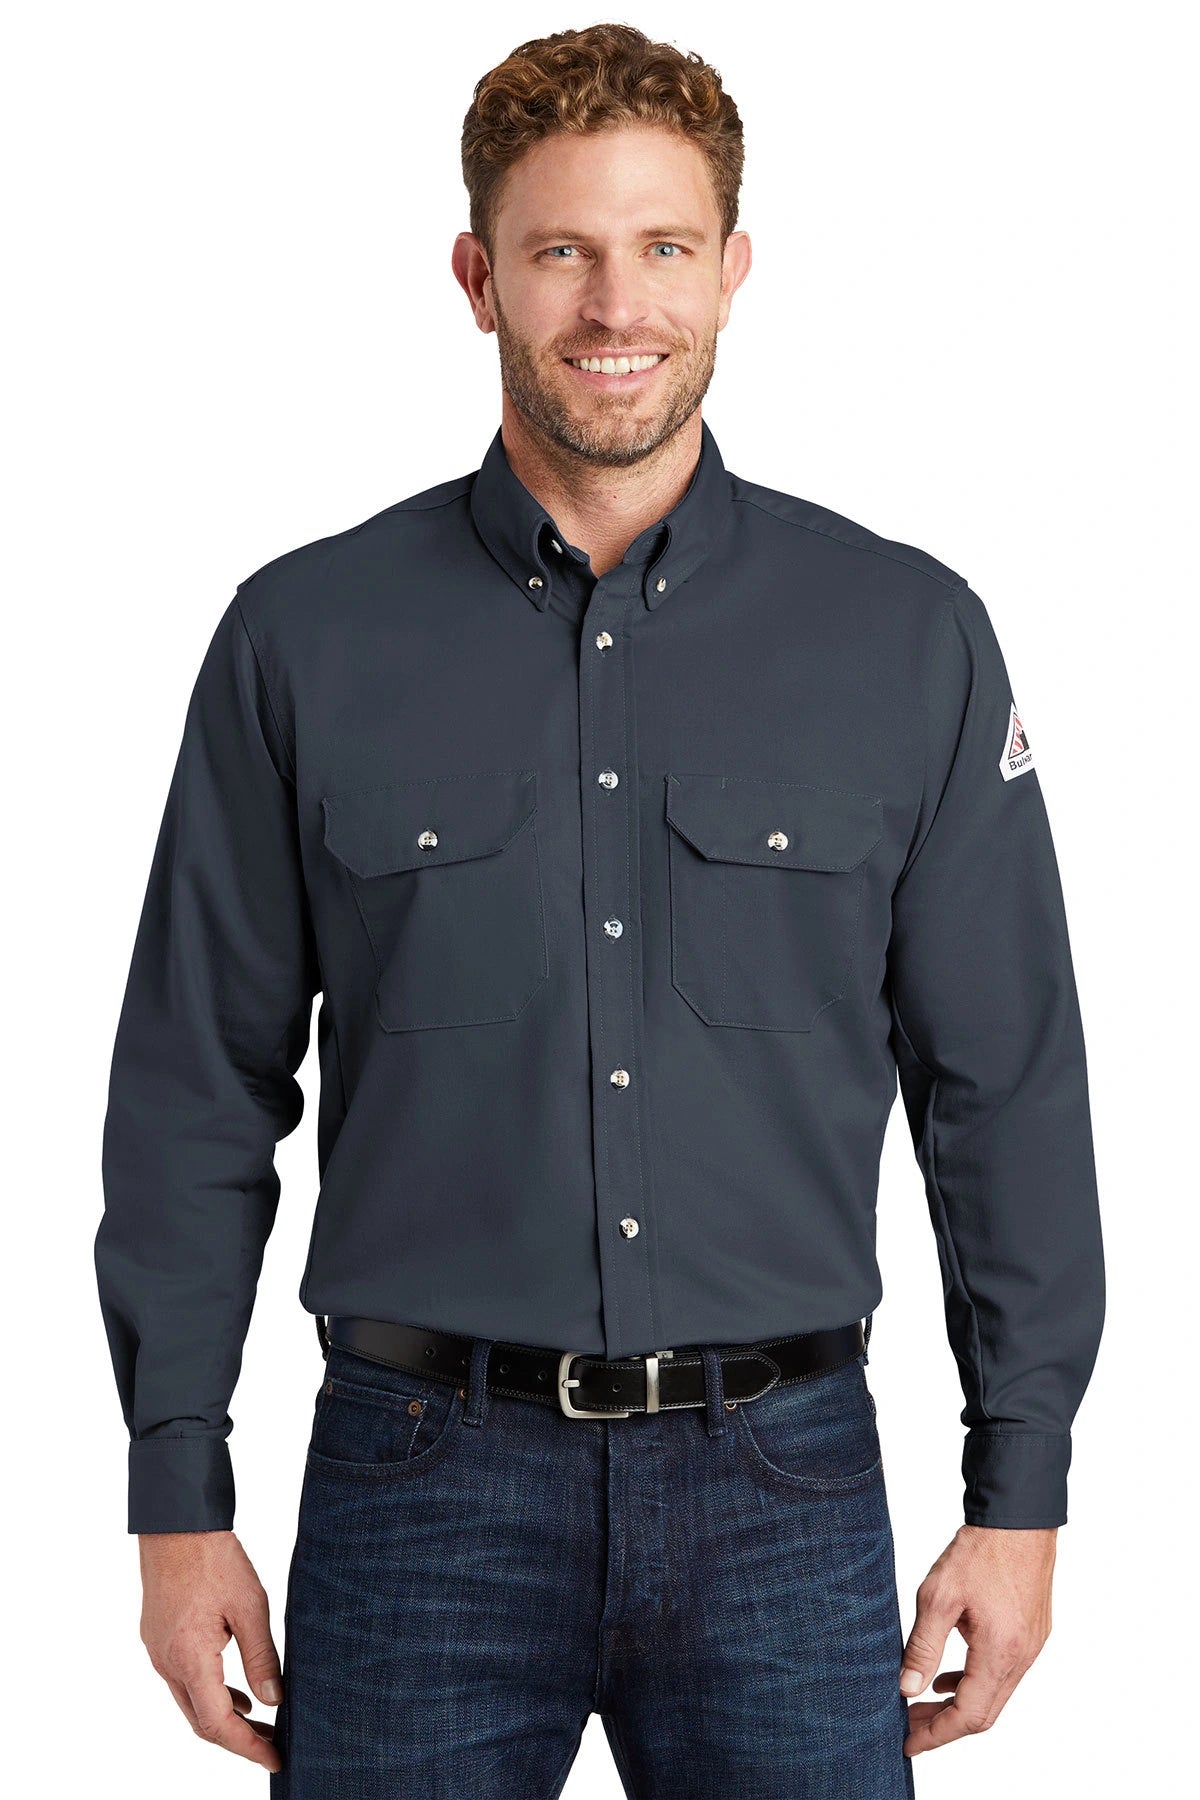 Bulwark® EXCEL FR® ComforTouch® Uniform Shirt Flame Resistant SLU2